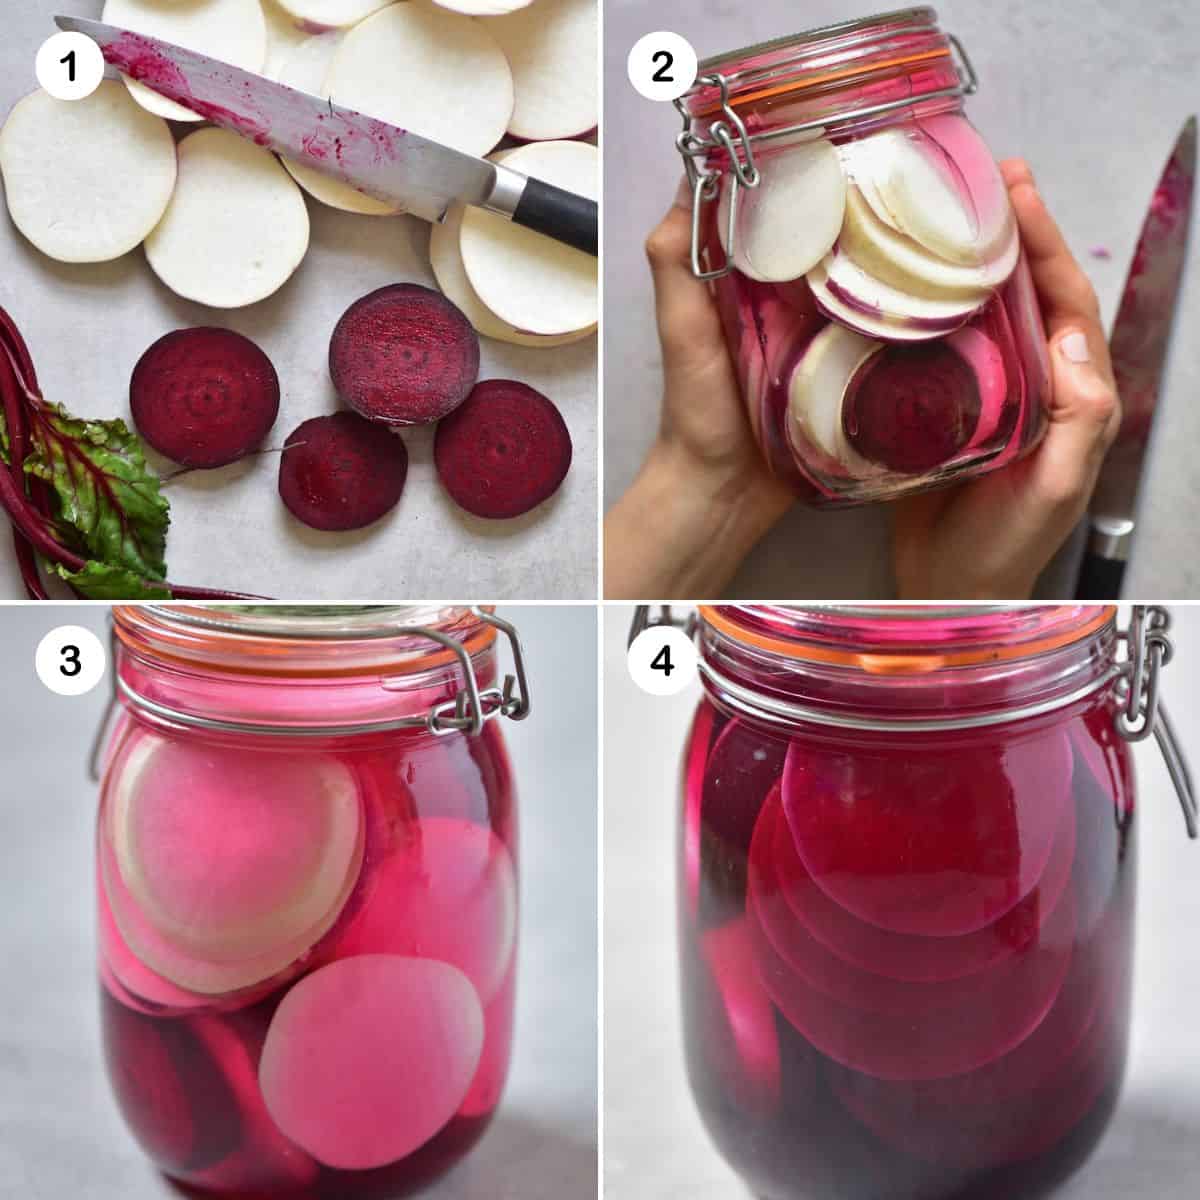 Steps for making pickled turnips